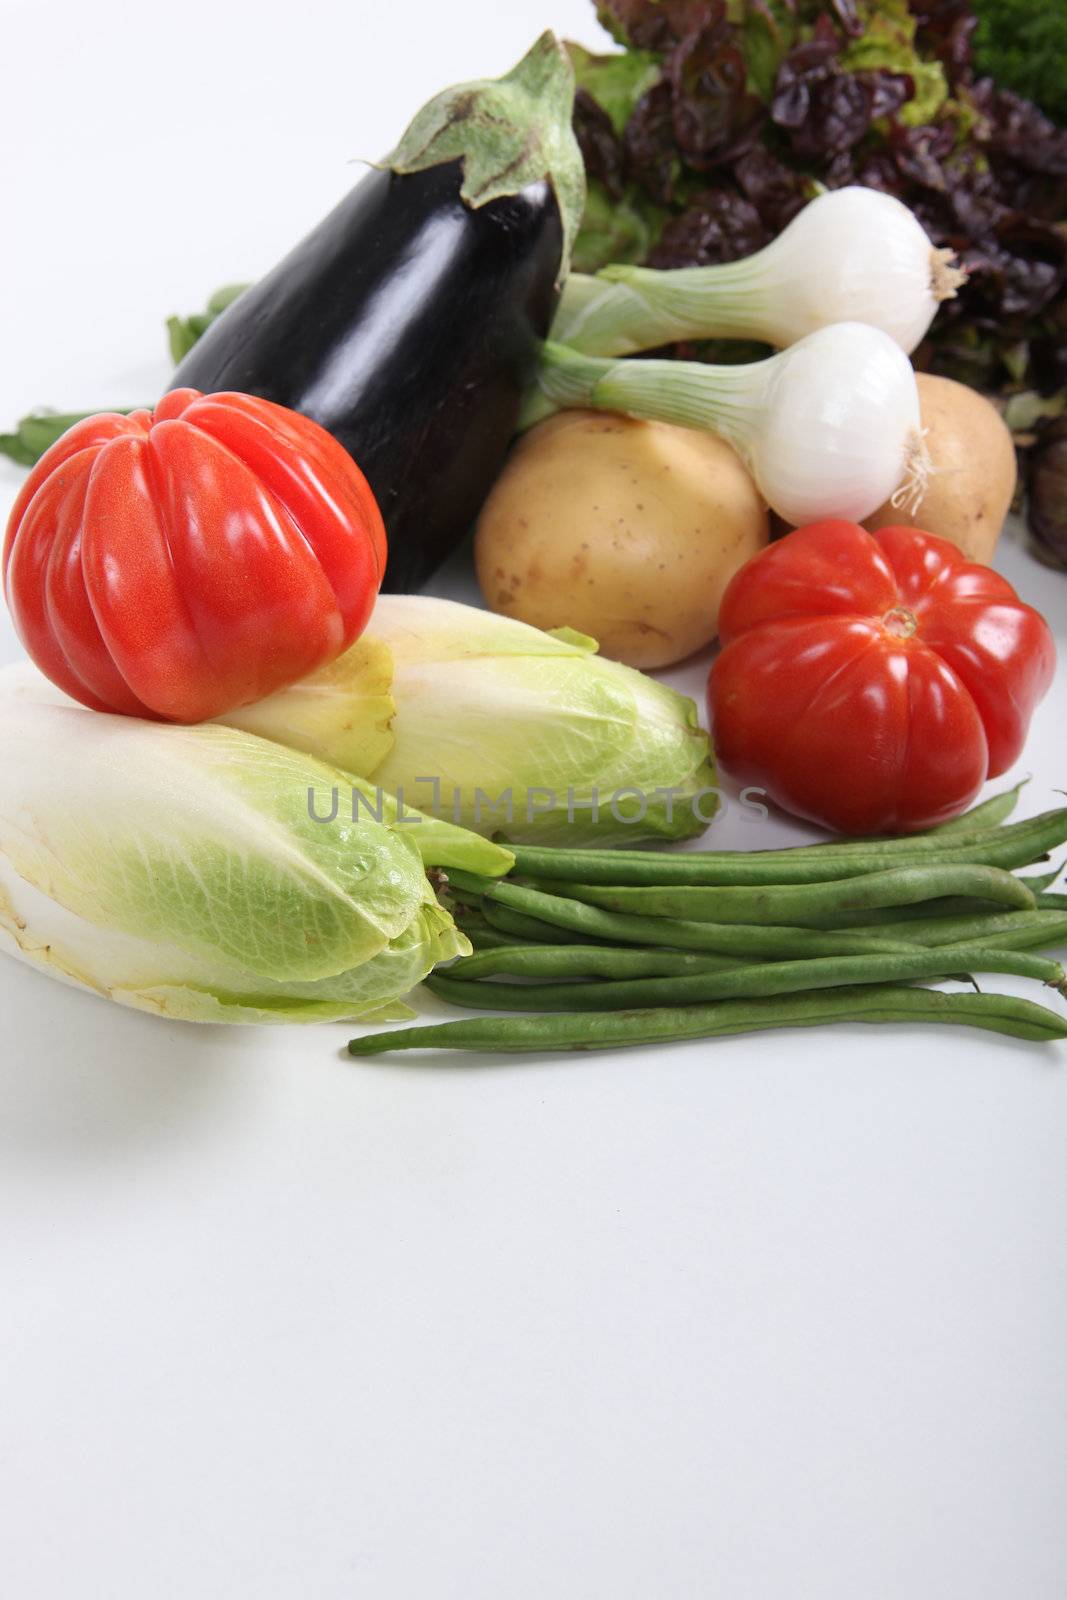 Variety of vegetables by phovoir